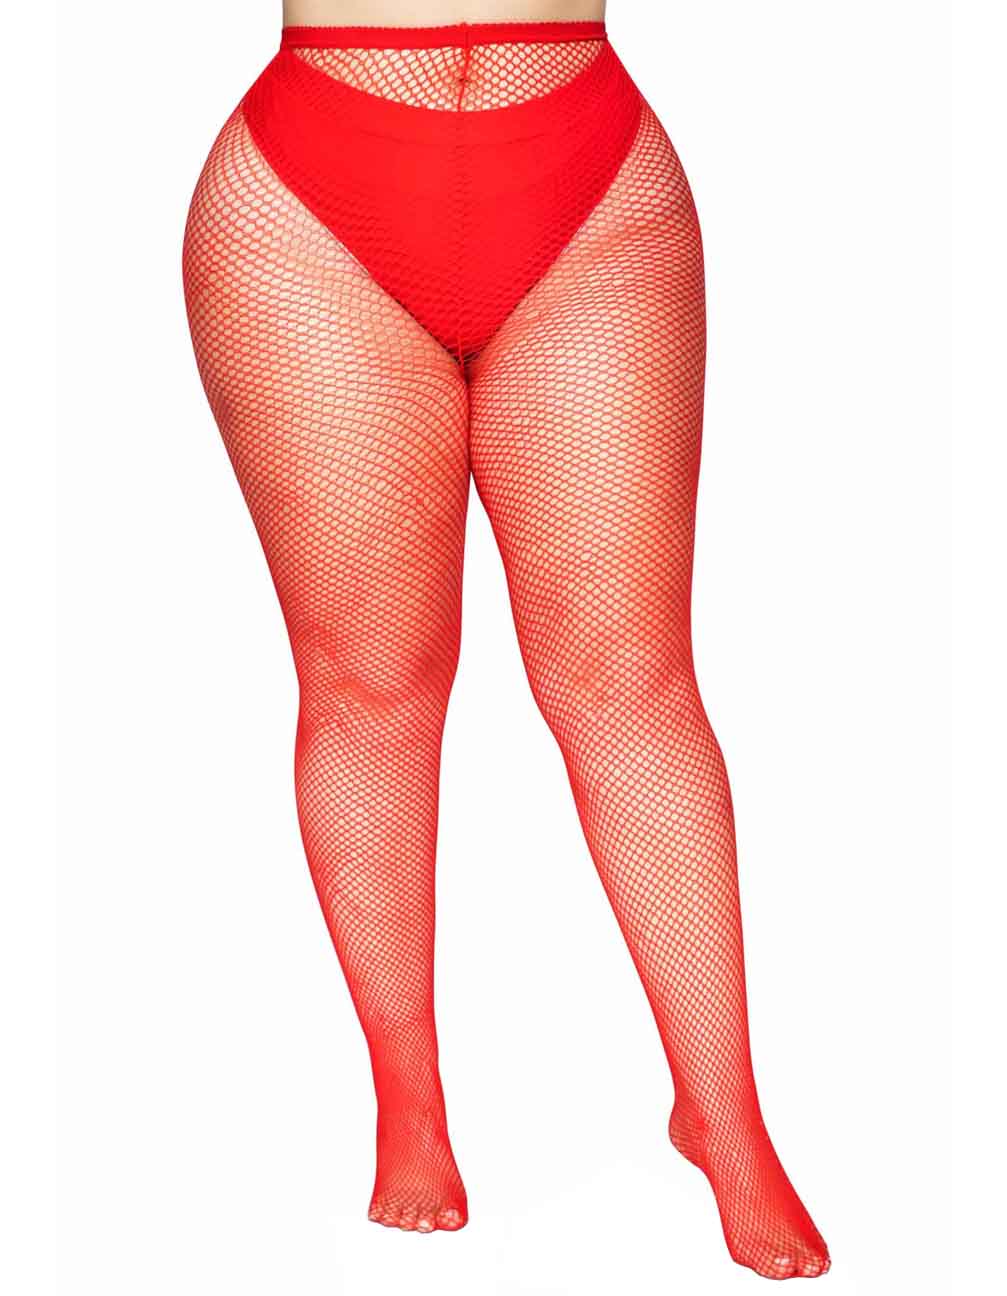 Leg Avenue 9001q Nylon Fishnet Pantyhose - bright red plus size micro net mesh tights